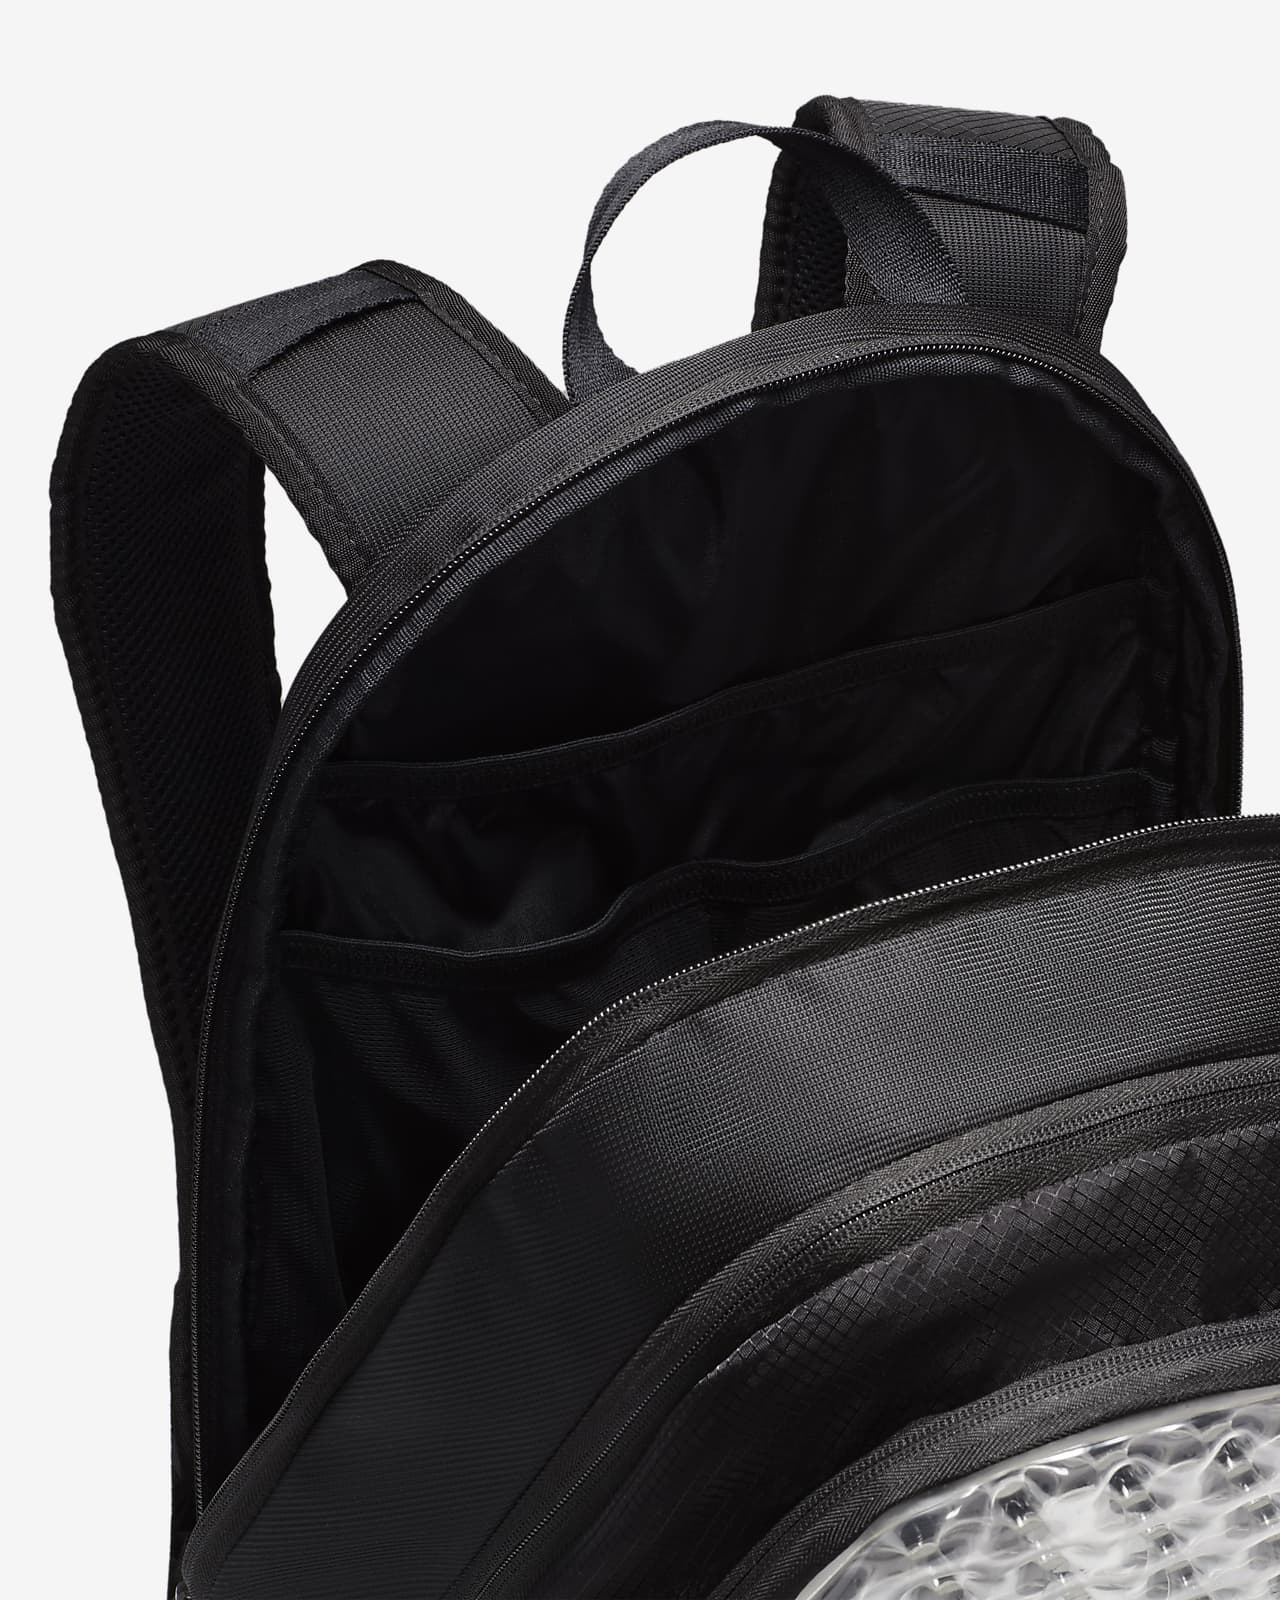 Nike Hayward Futura 2.0 (black/black/white) Backpack Bags in Red